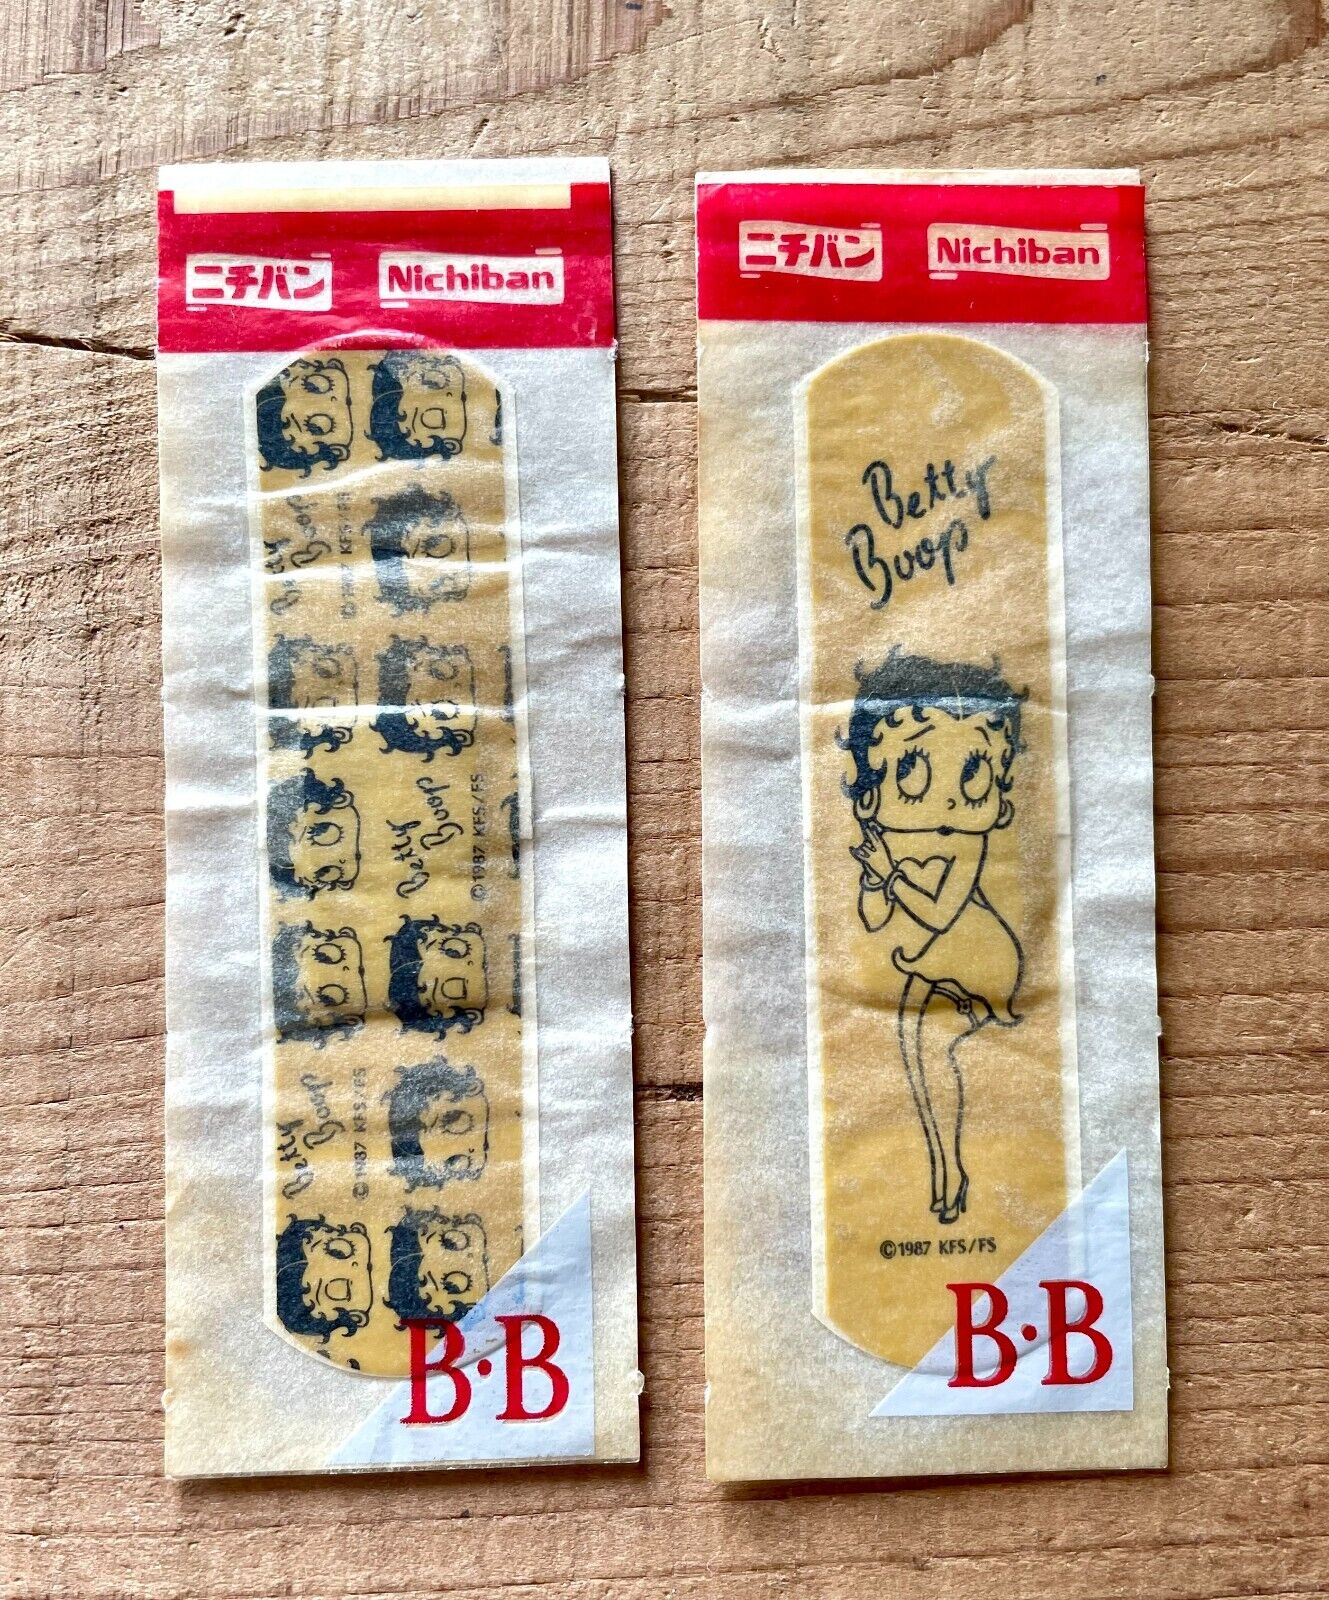 1987 Betty Boop Band aid 2 sheets vintage Nichiban Japan